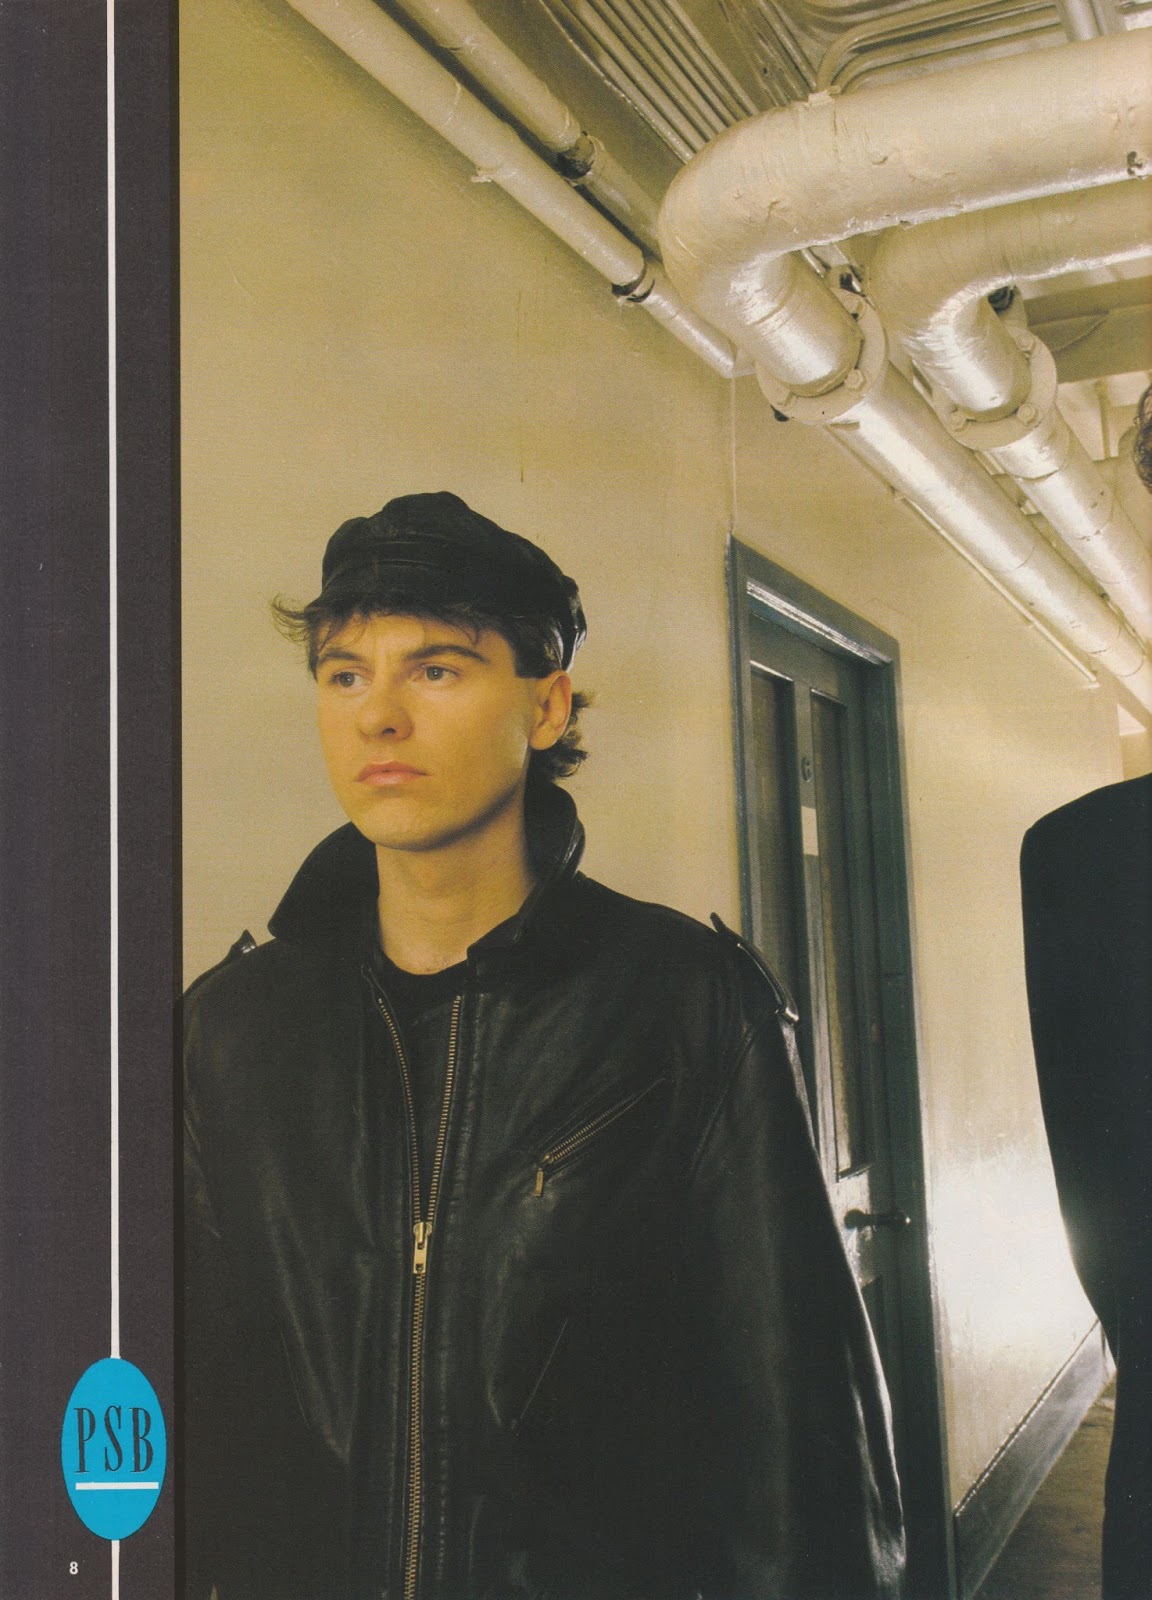 Top Of The Pop Culture 80s: Pet Shop Boys Number 1 Magazine 1986 Interview